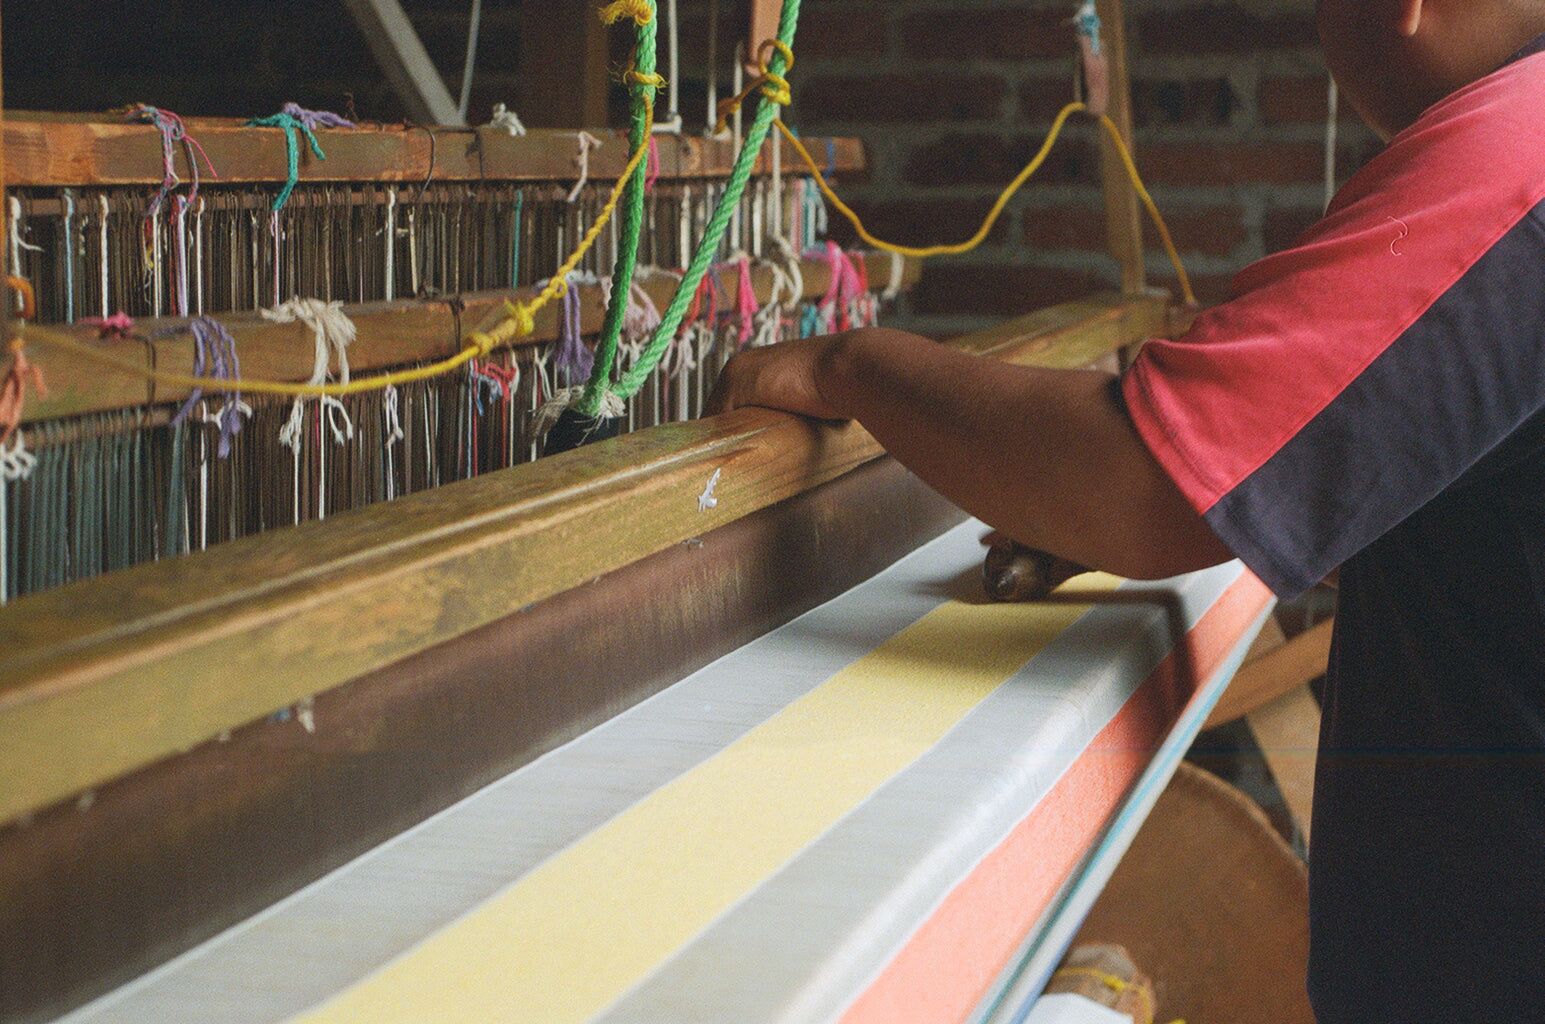 Casa Ojo - Luxury handcrafted home goods. Oaxacan textiles. Indigenous artisan.